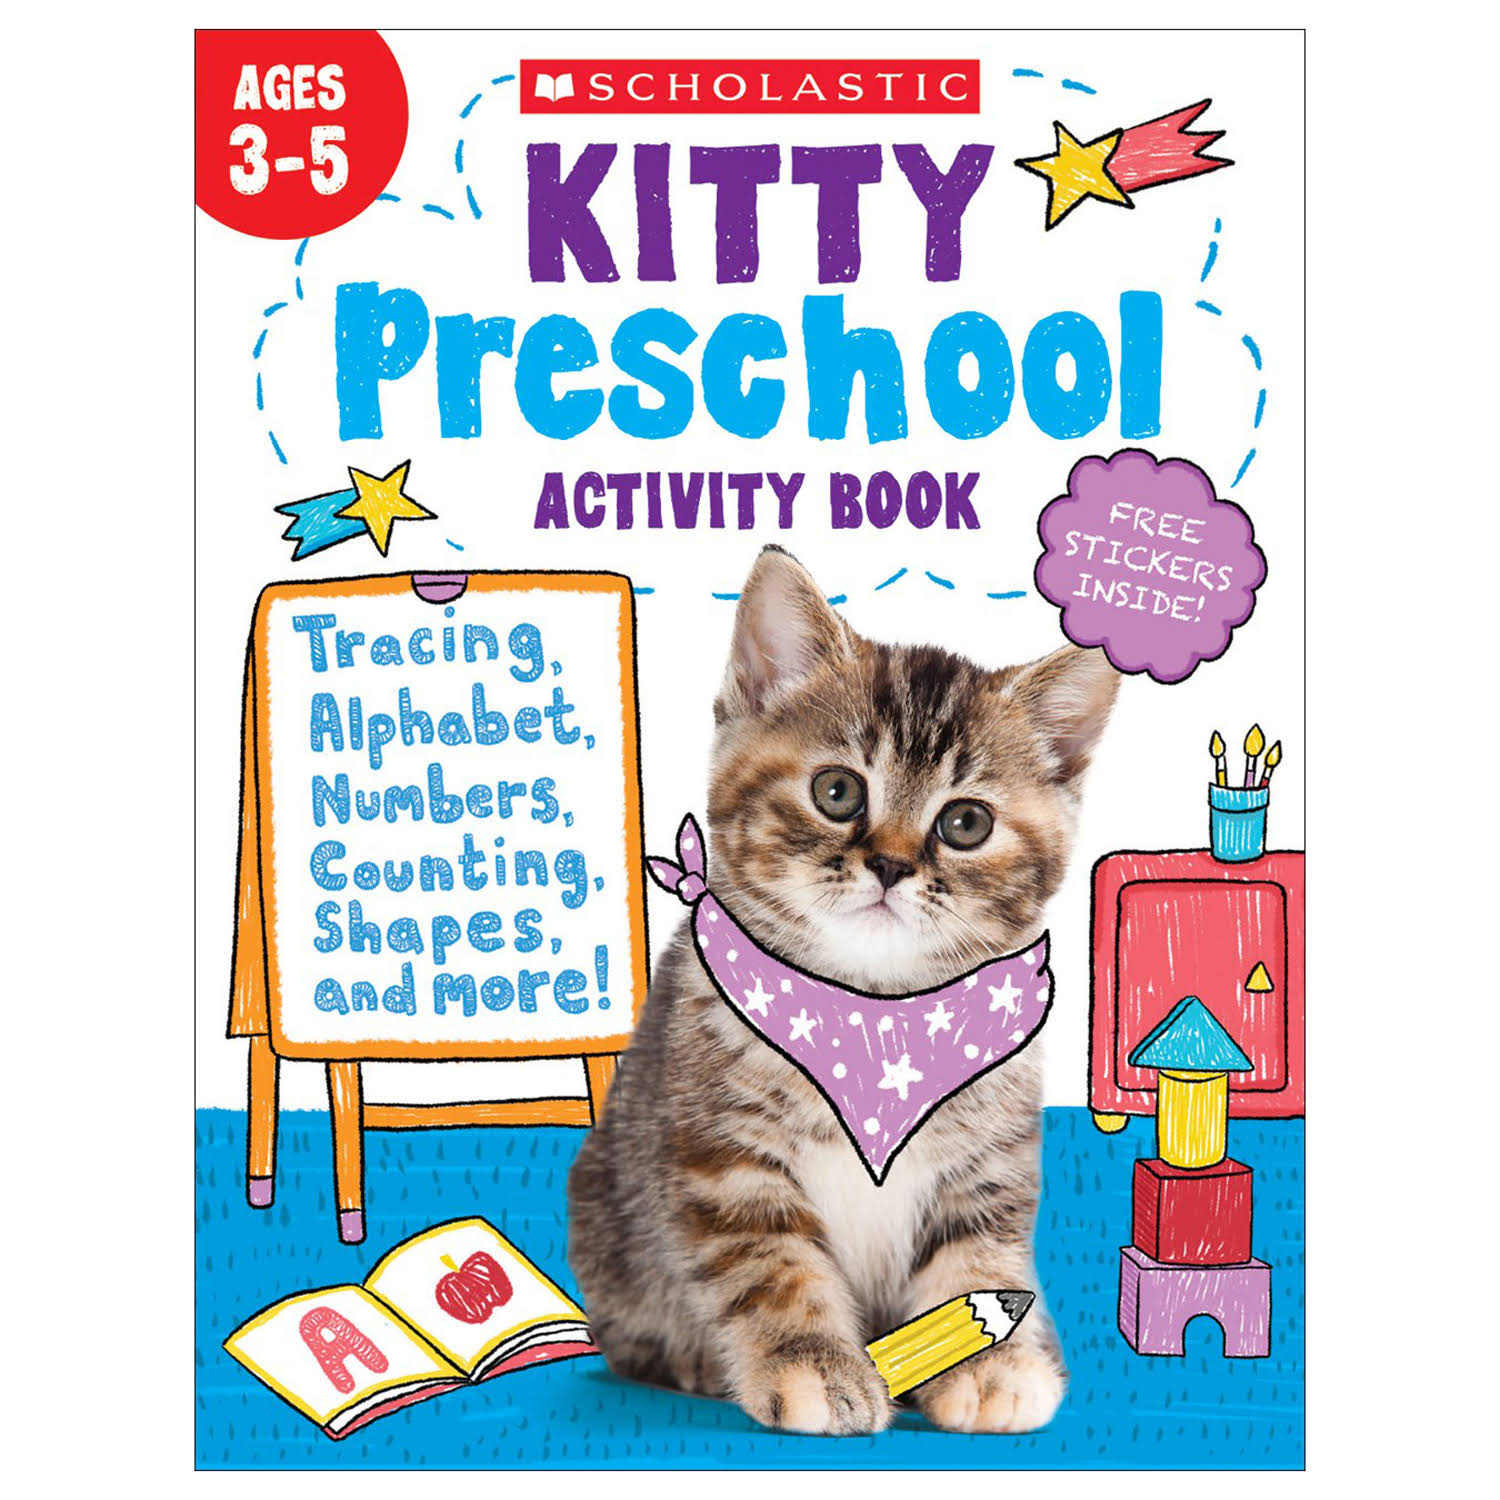 Kitty Preschool Activity Book [Book]